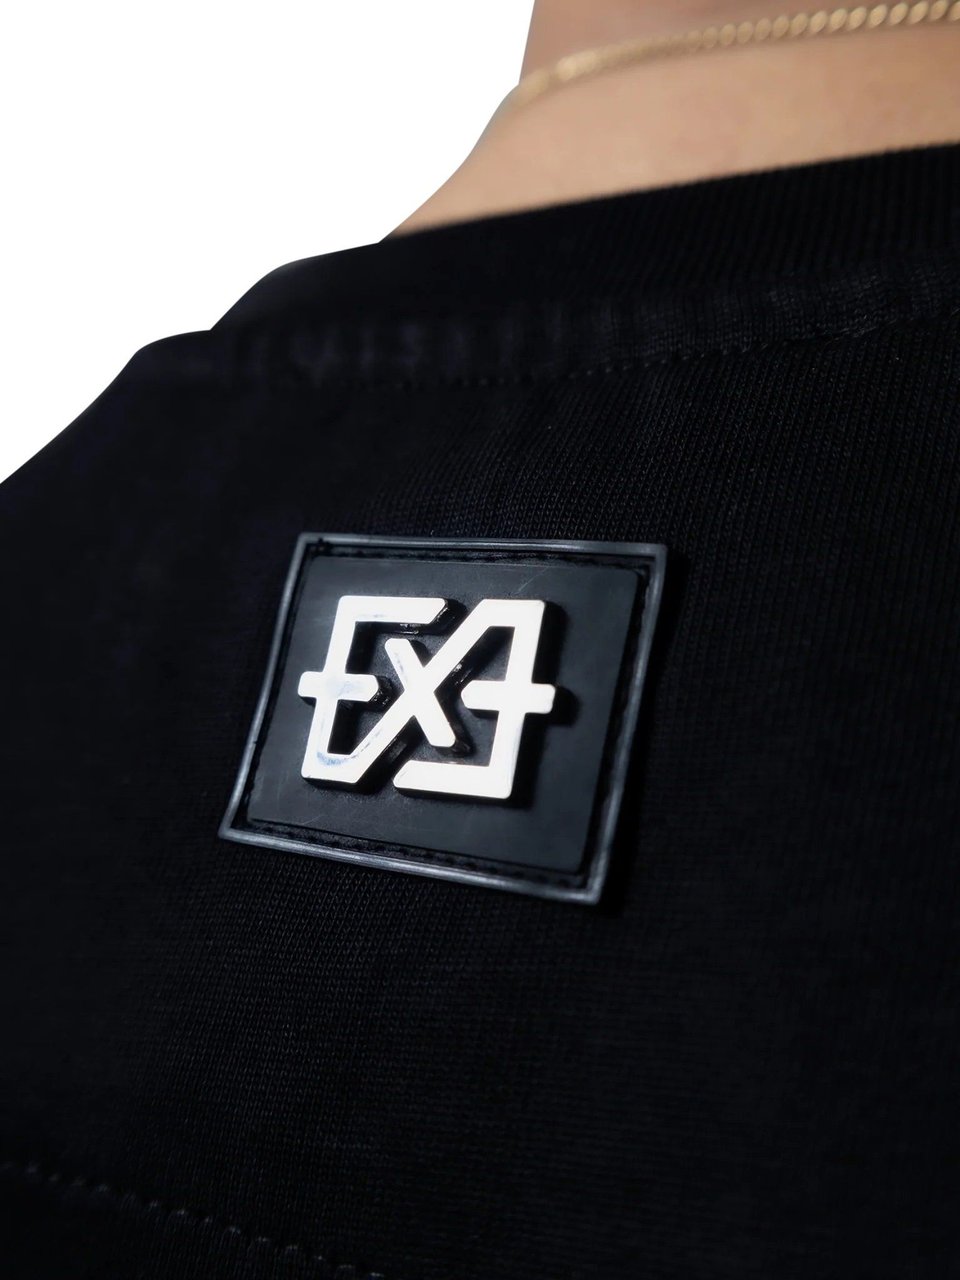 XPLCT Studios Pisces T-Shirt Zwart